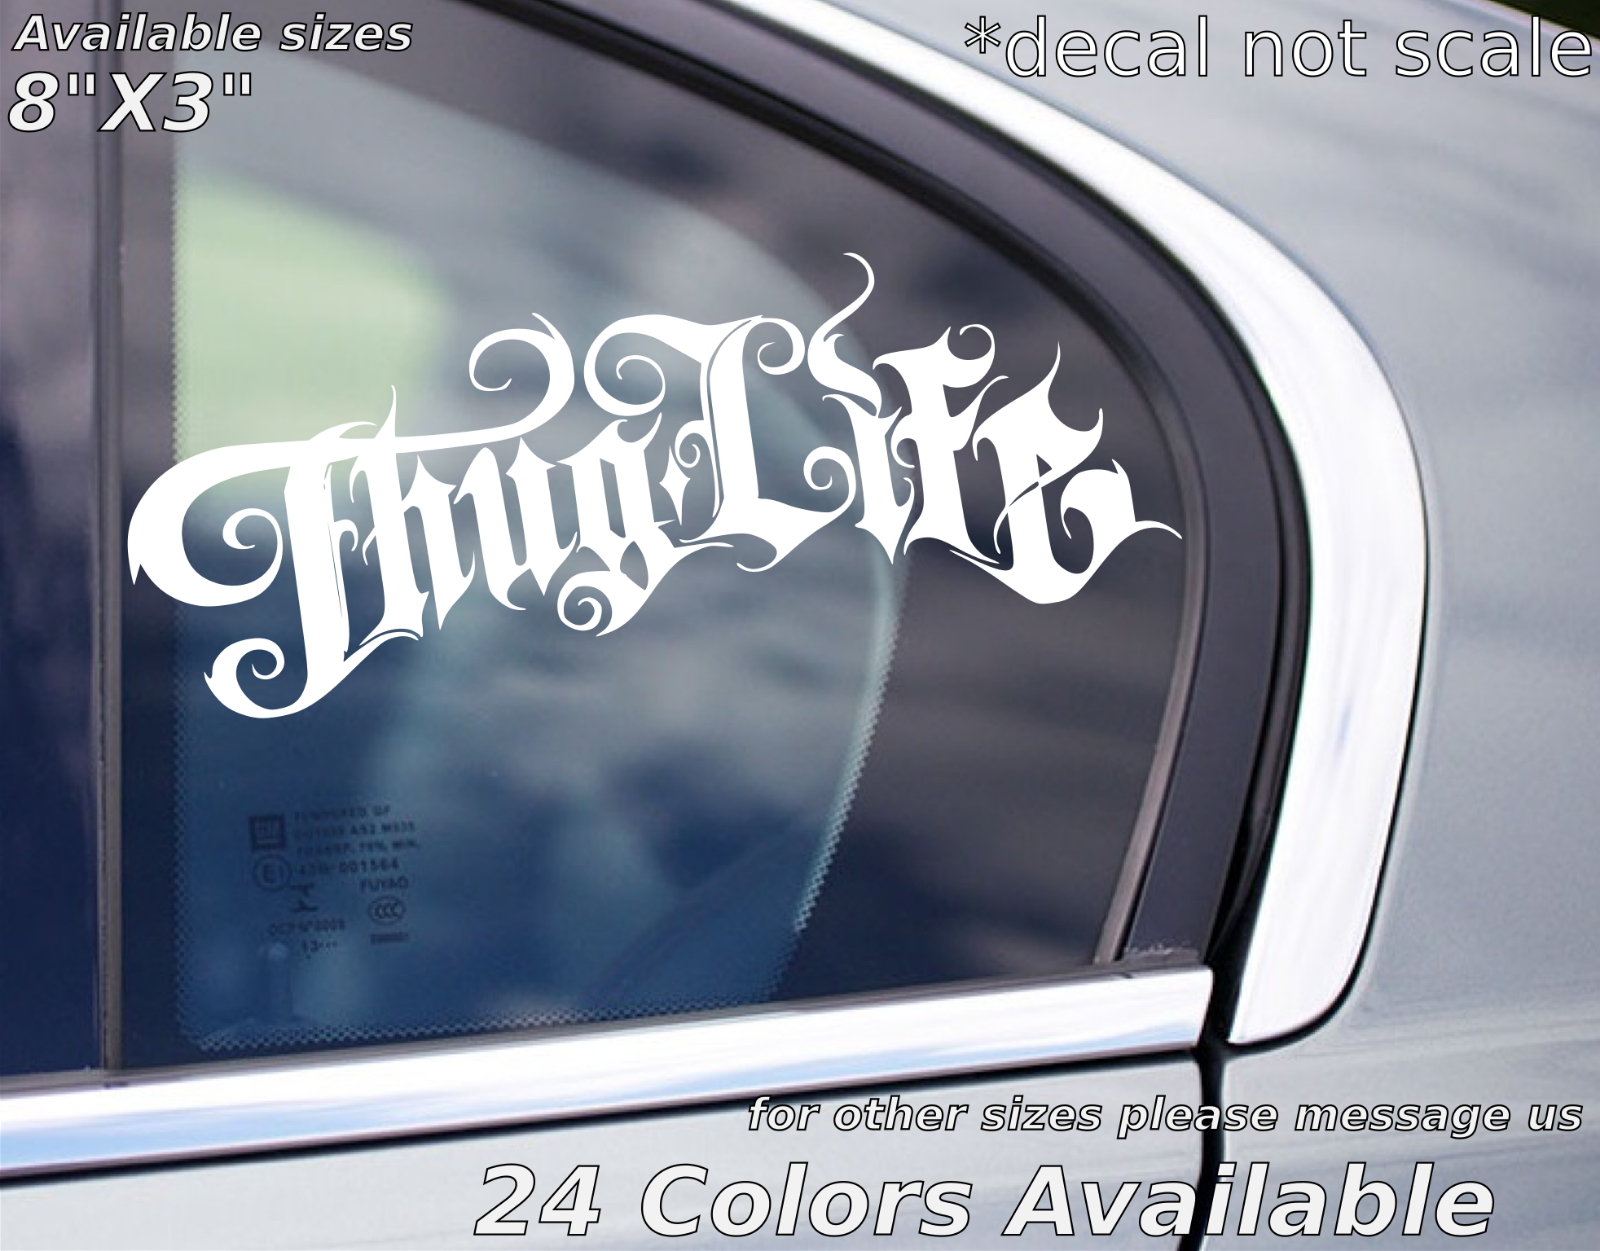 Thug Life Decal Sticker GTA Car Truck SUV ready to apply A